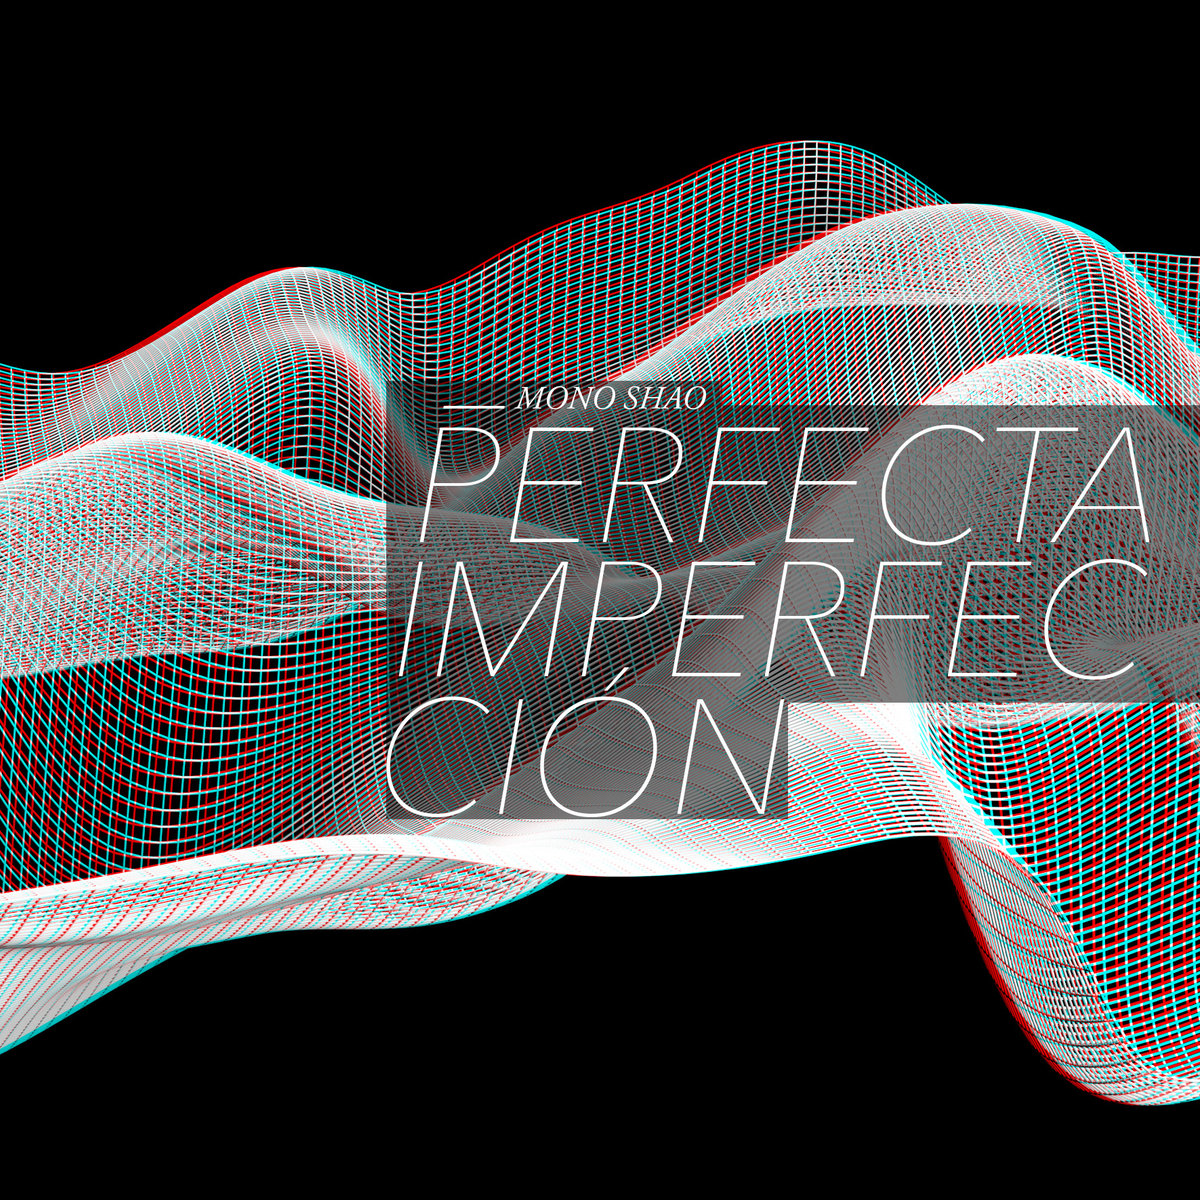 Perfecta_imperfecci_n